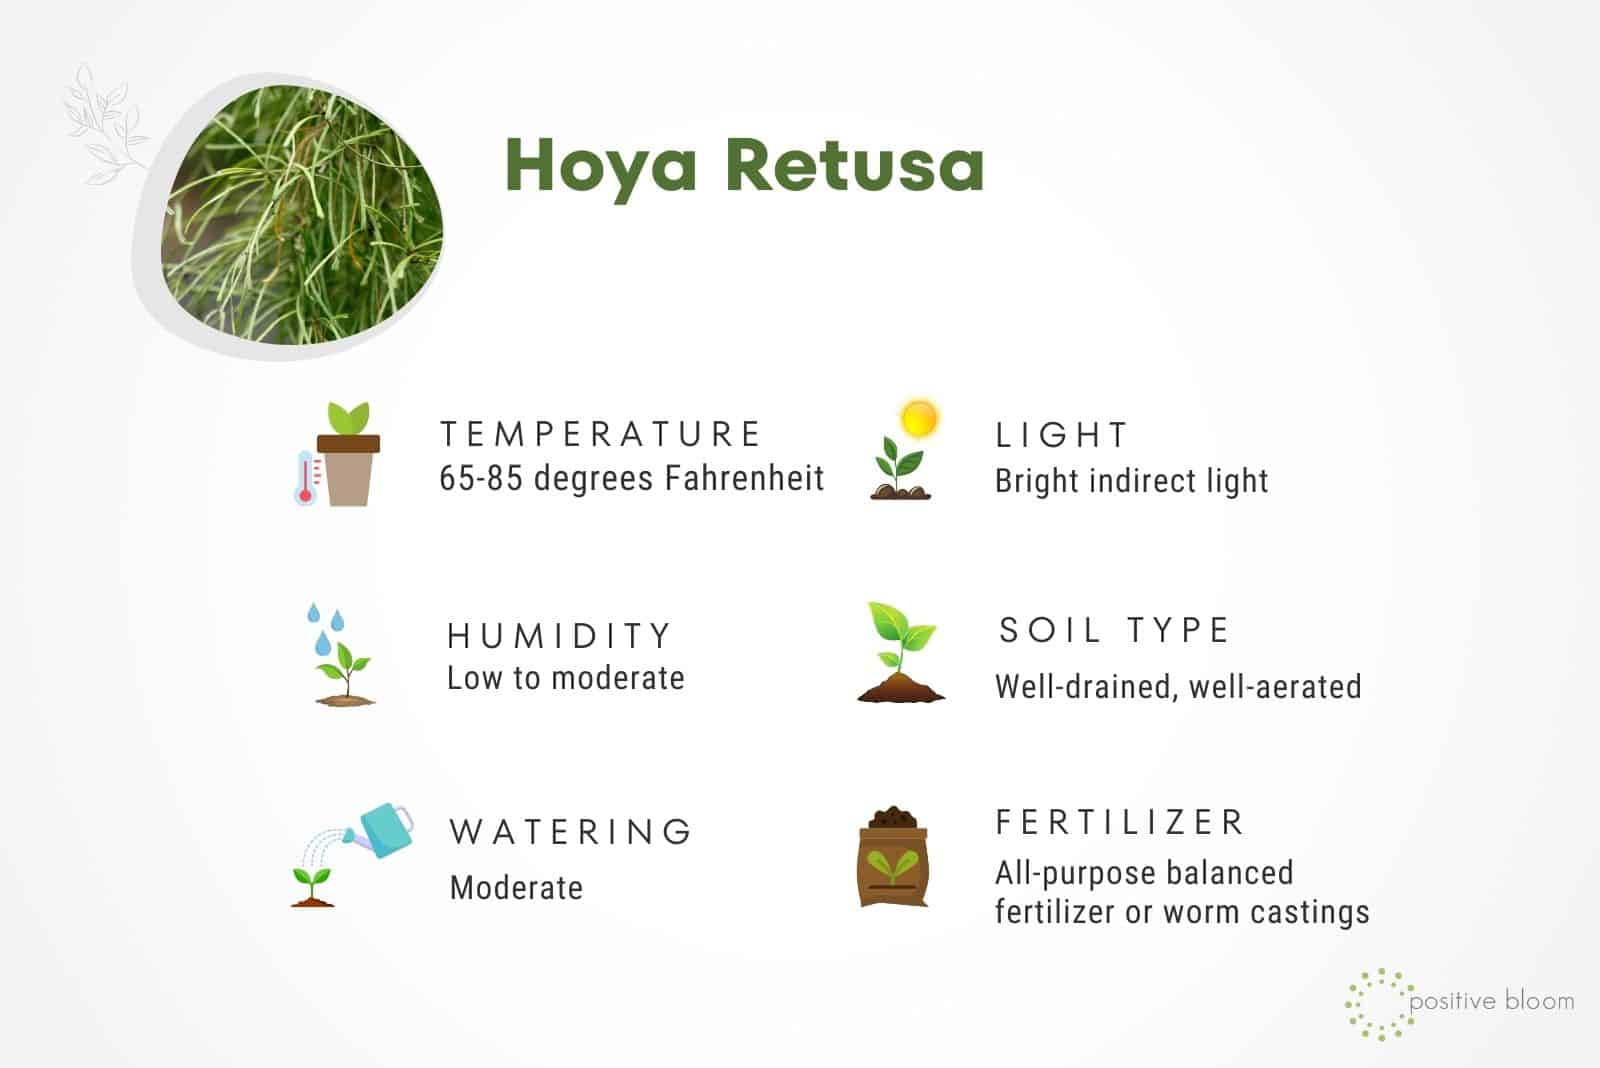 Hoya Retusa